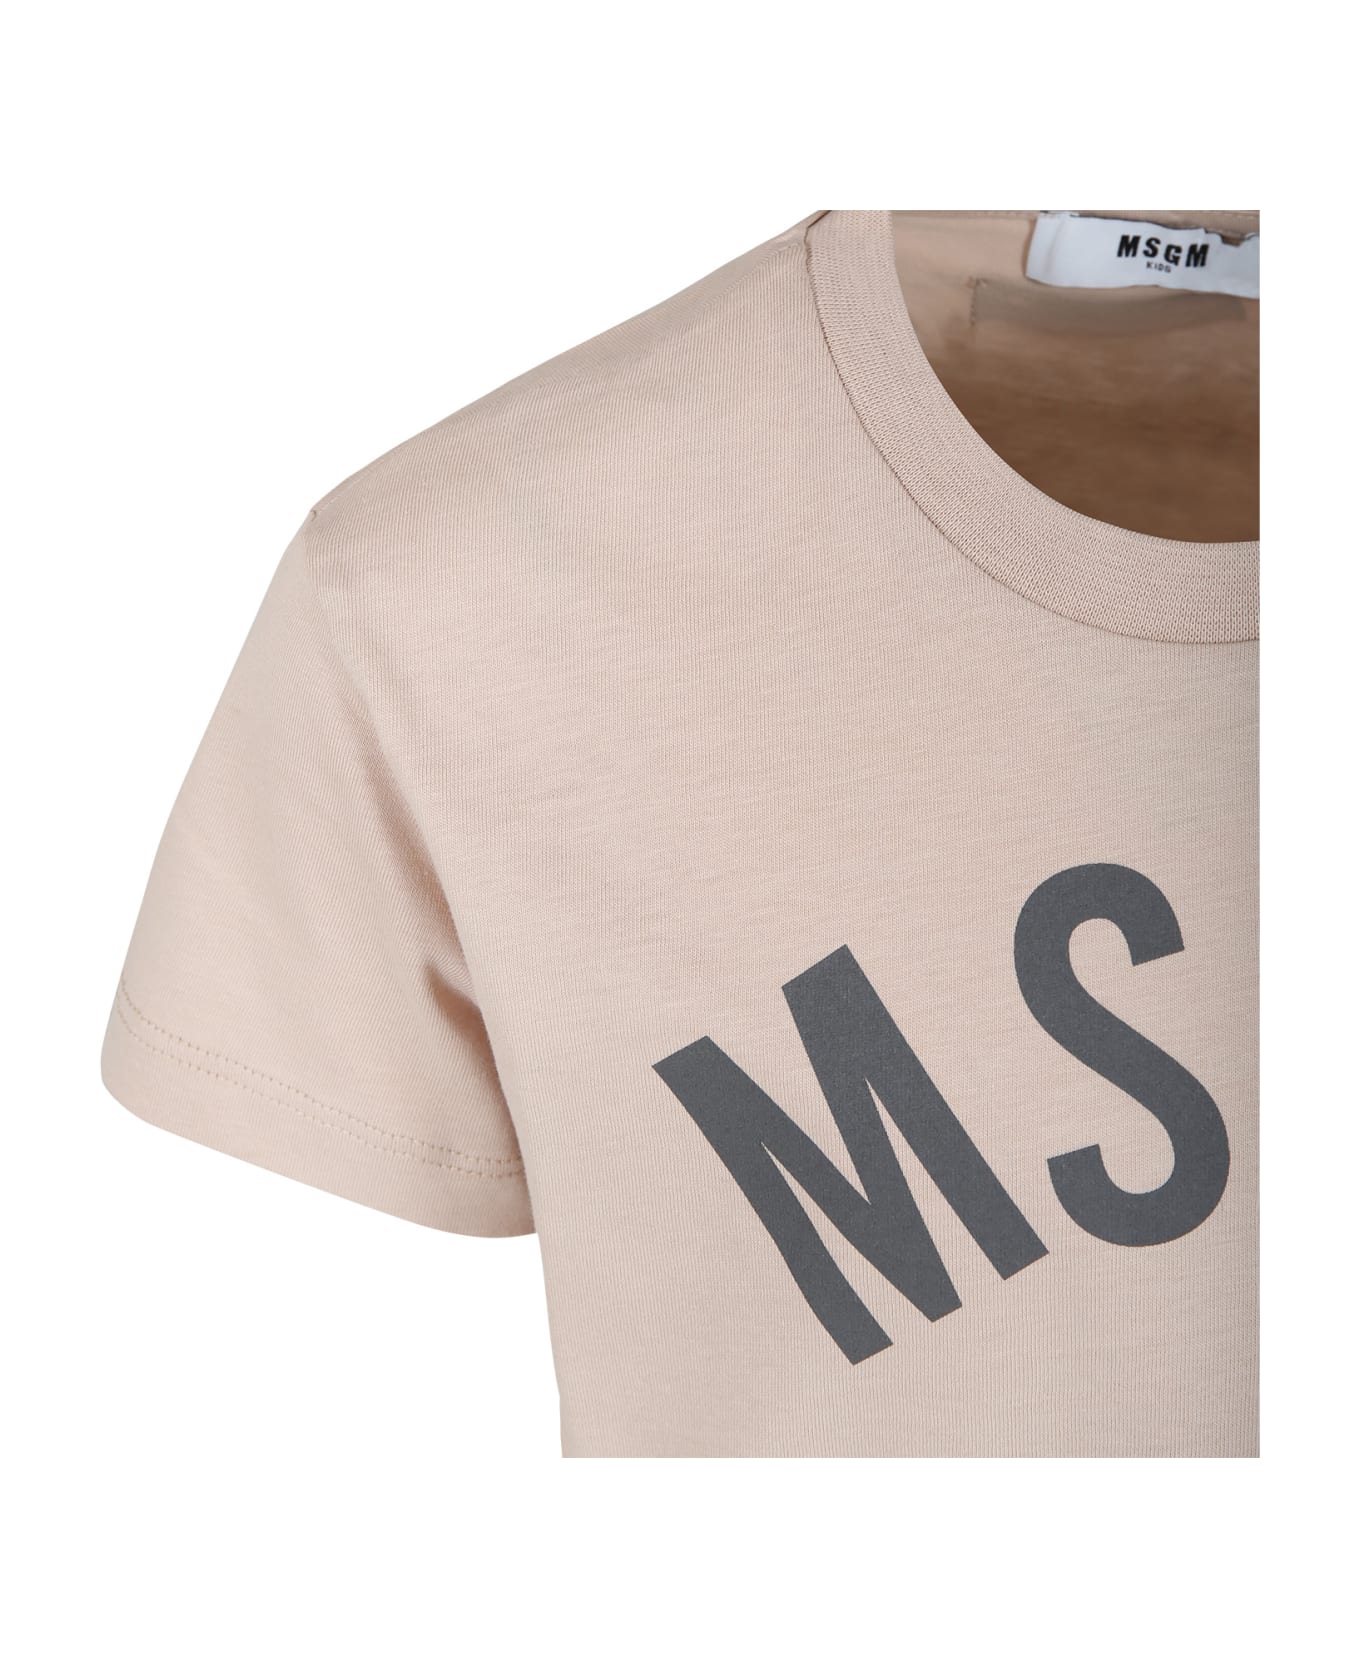 MSGM Beige T-shirt For Boy With Logo - Beige